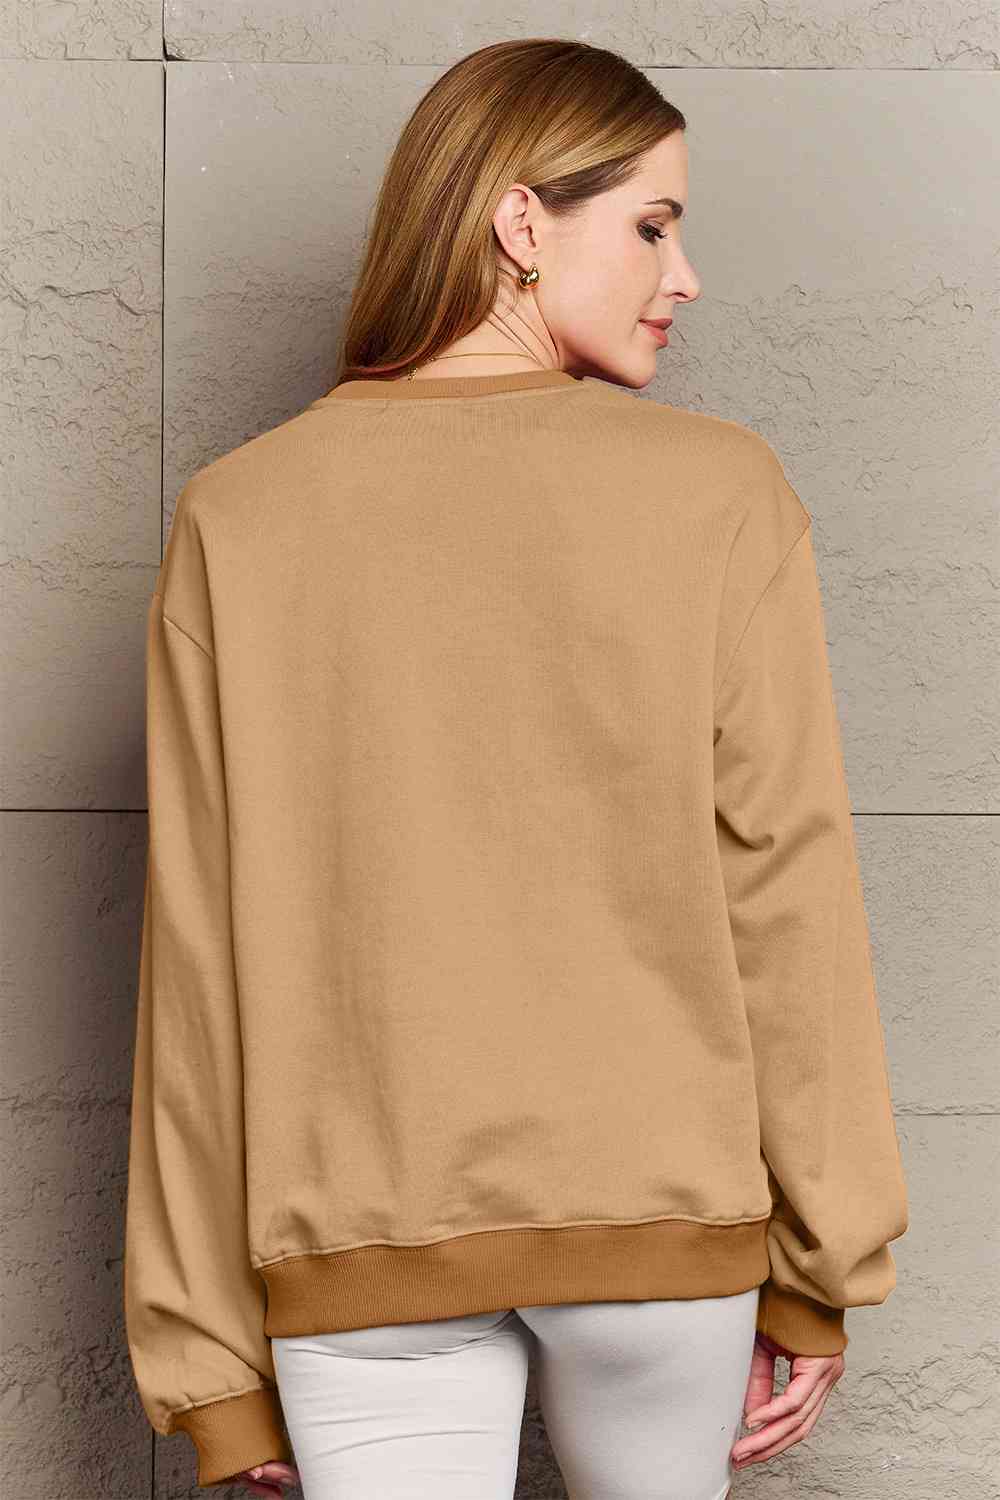 Simply Love Full Size WEST COAST Graphic Long Sleeve Sweatshirt